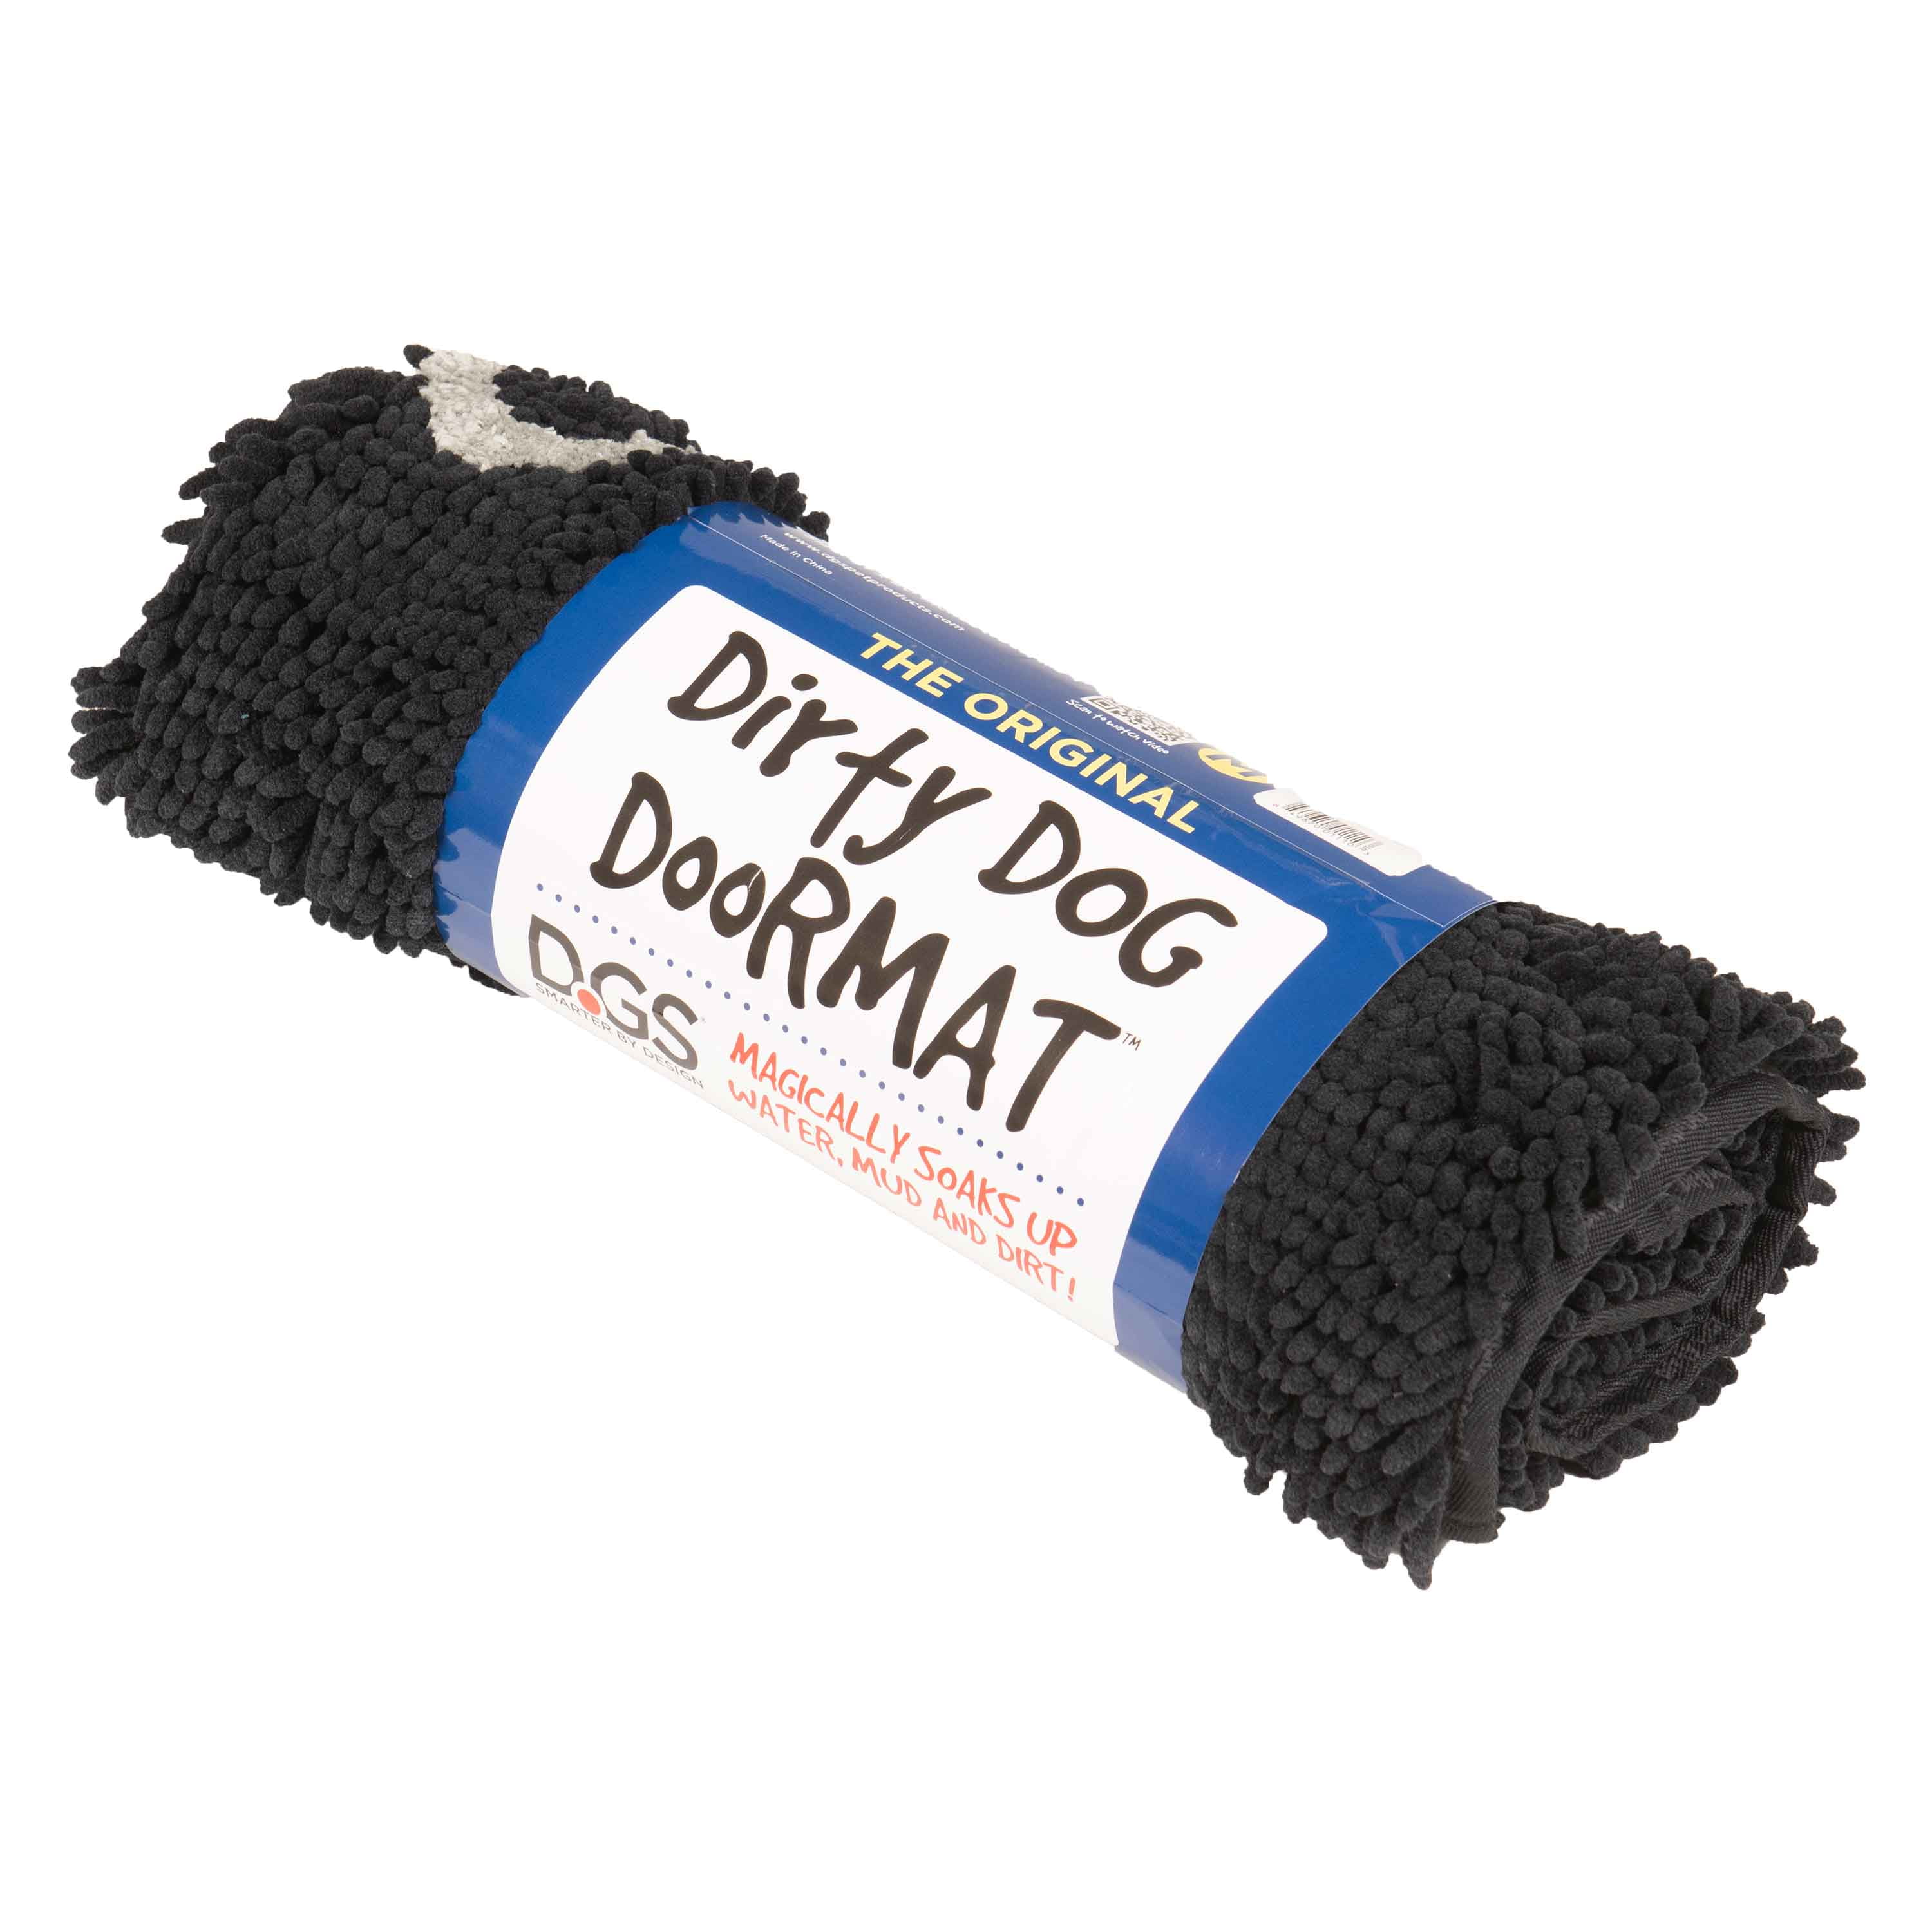 Dirty Dog Doormat - Mocha Brown, Cold Spring Co-Op